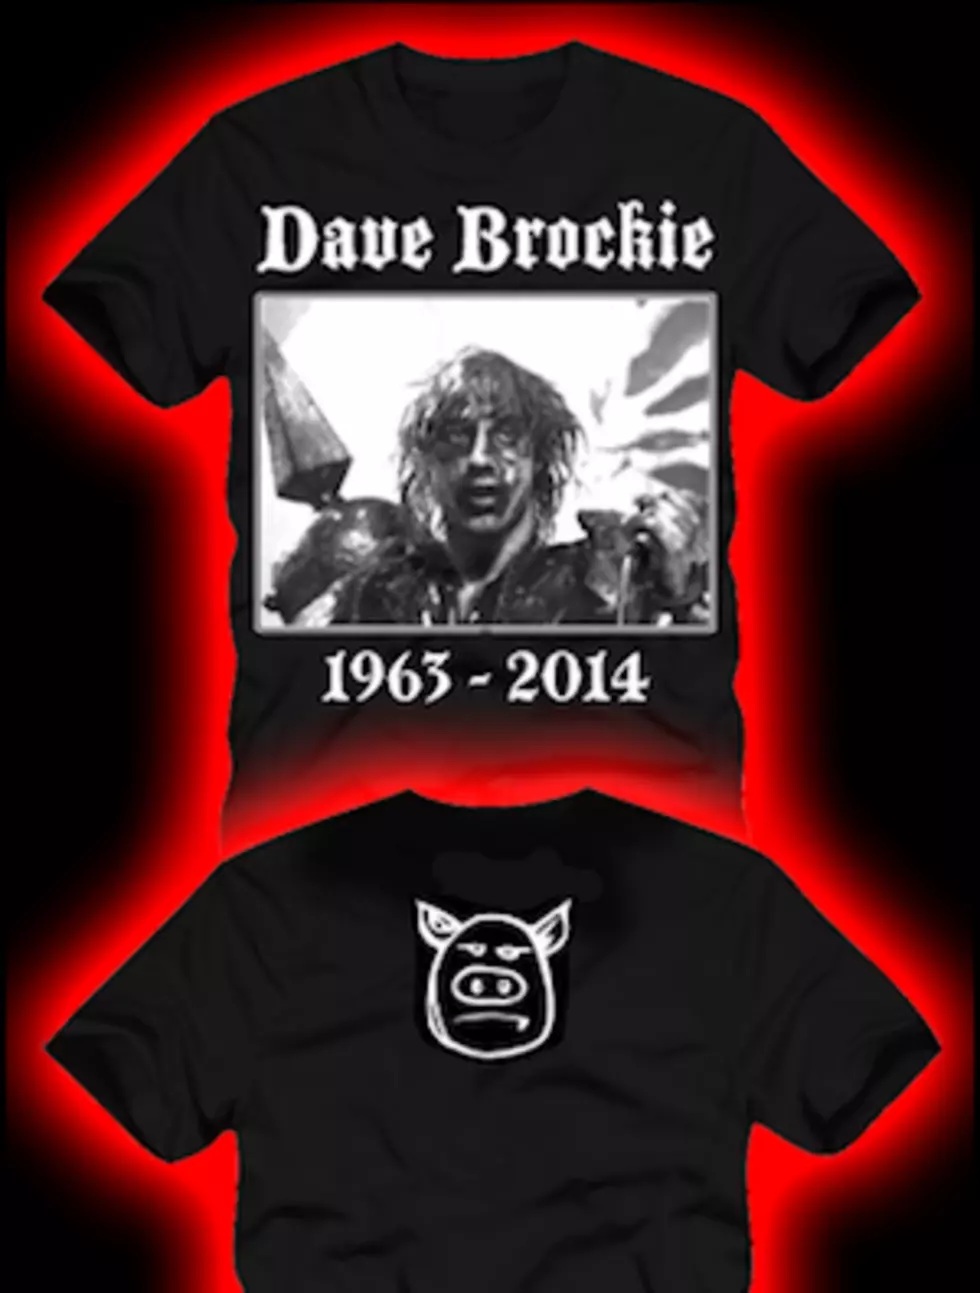 GWAR Unveil Dave Brockie Tribute Shirt To Raise Money for Foundation